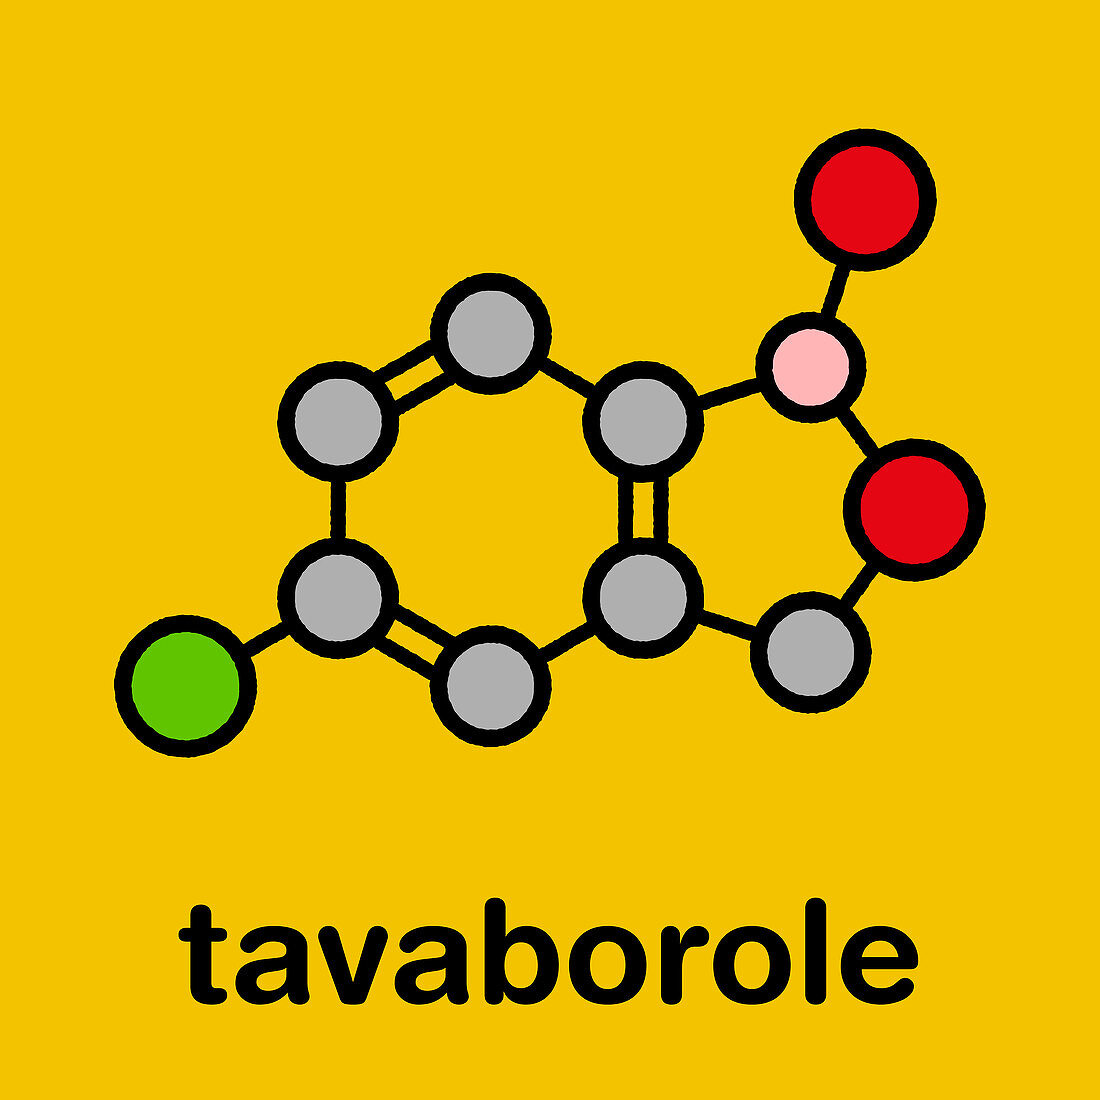 Tavaborole topical antifungal drug molecule, illustration